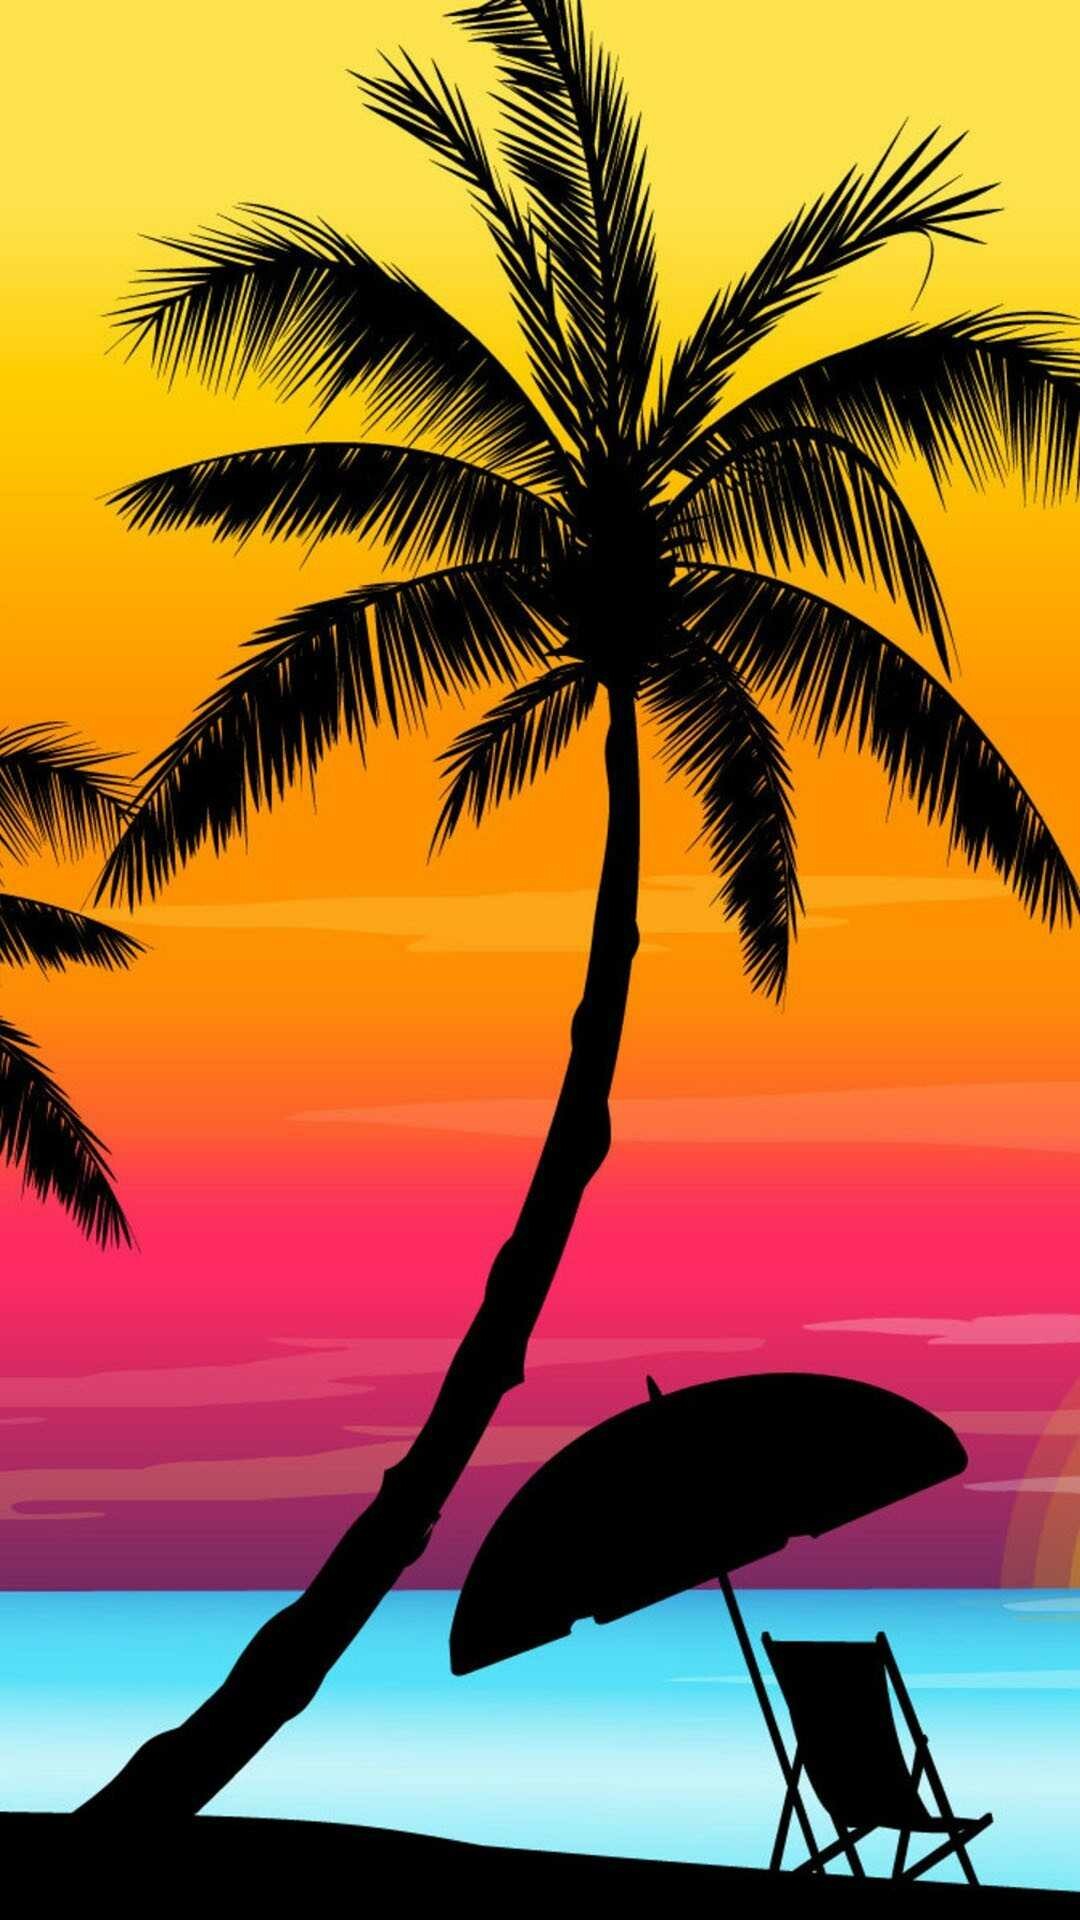 Summer: Hot days, Sunny season, Tropical island paradise. 1080x1920 Full HD Background.